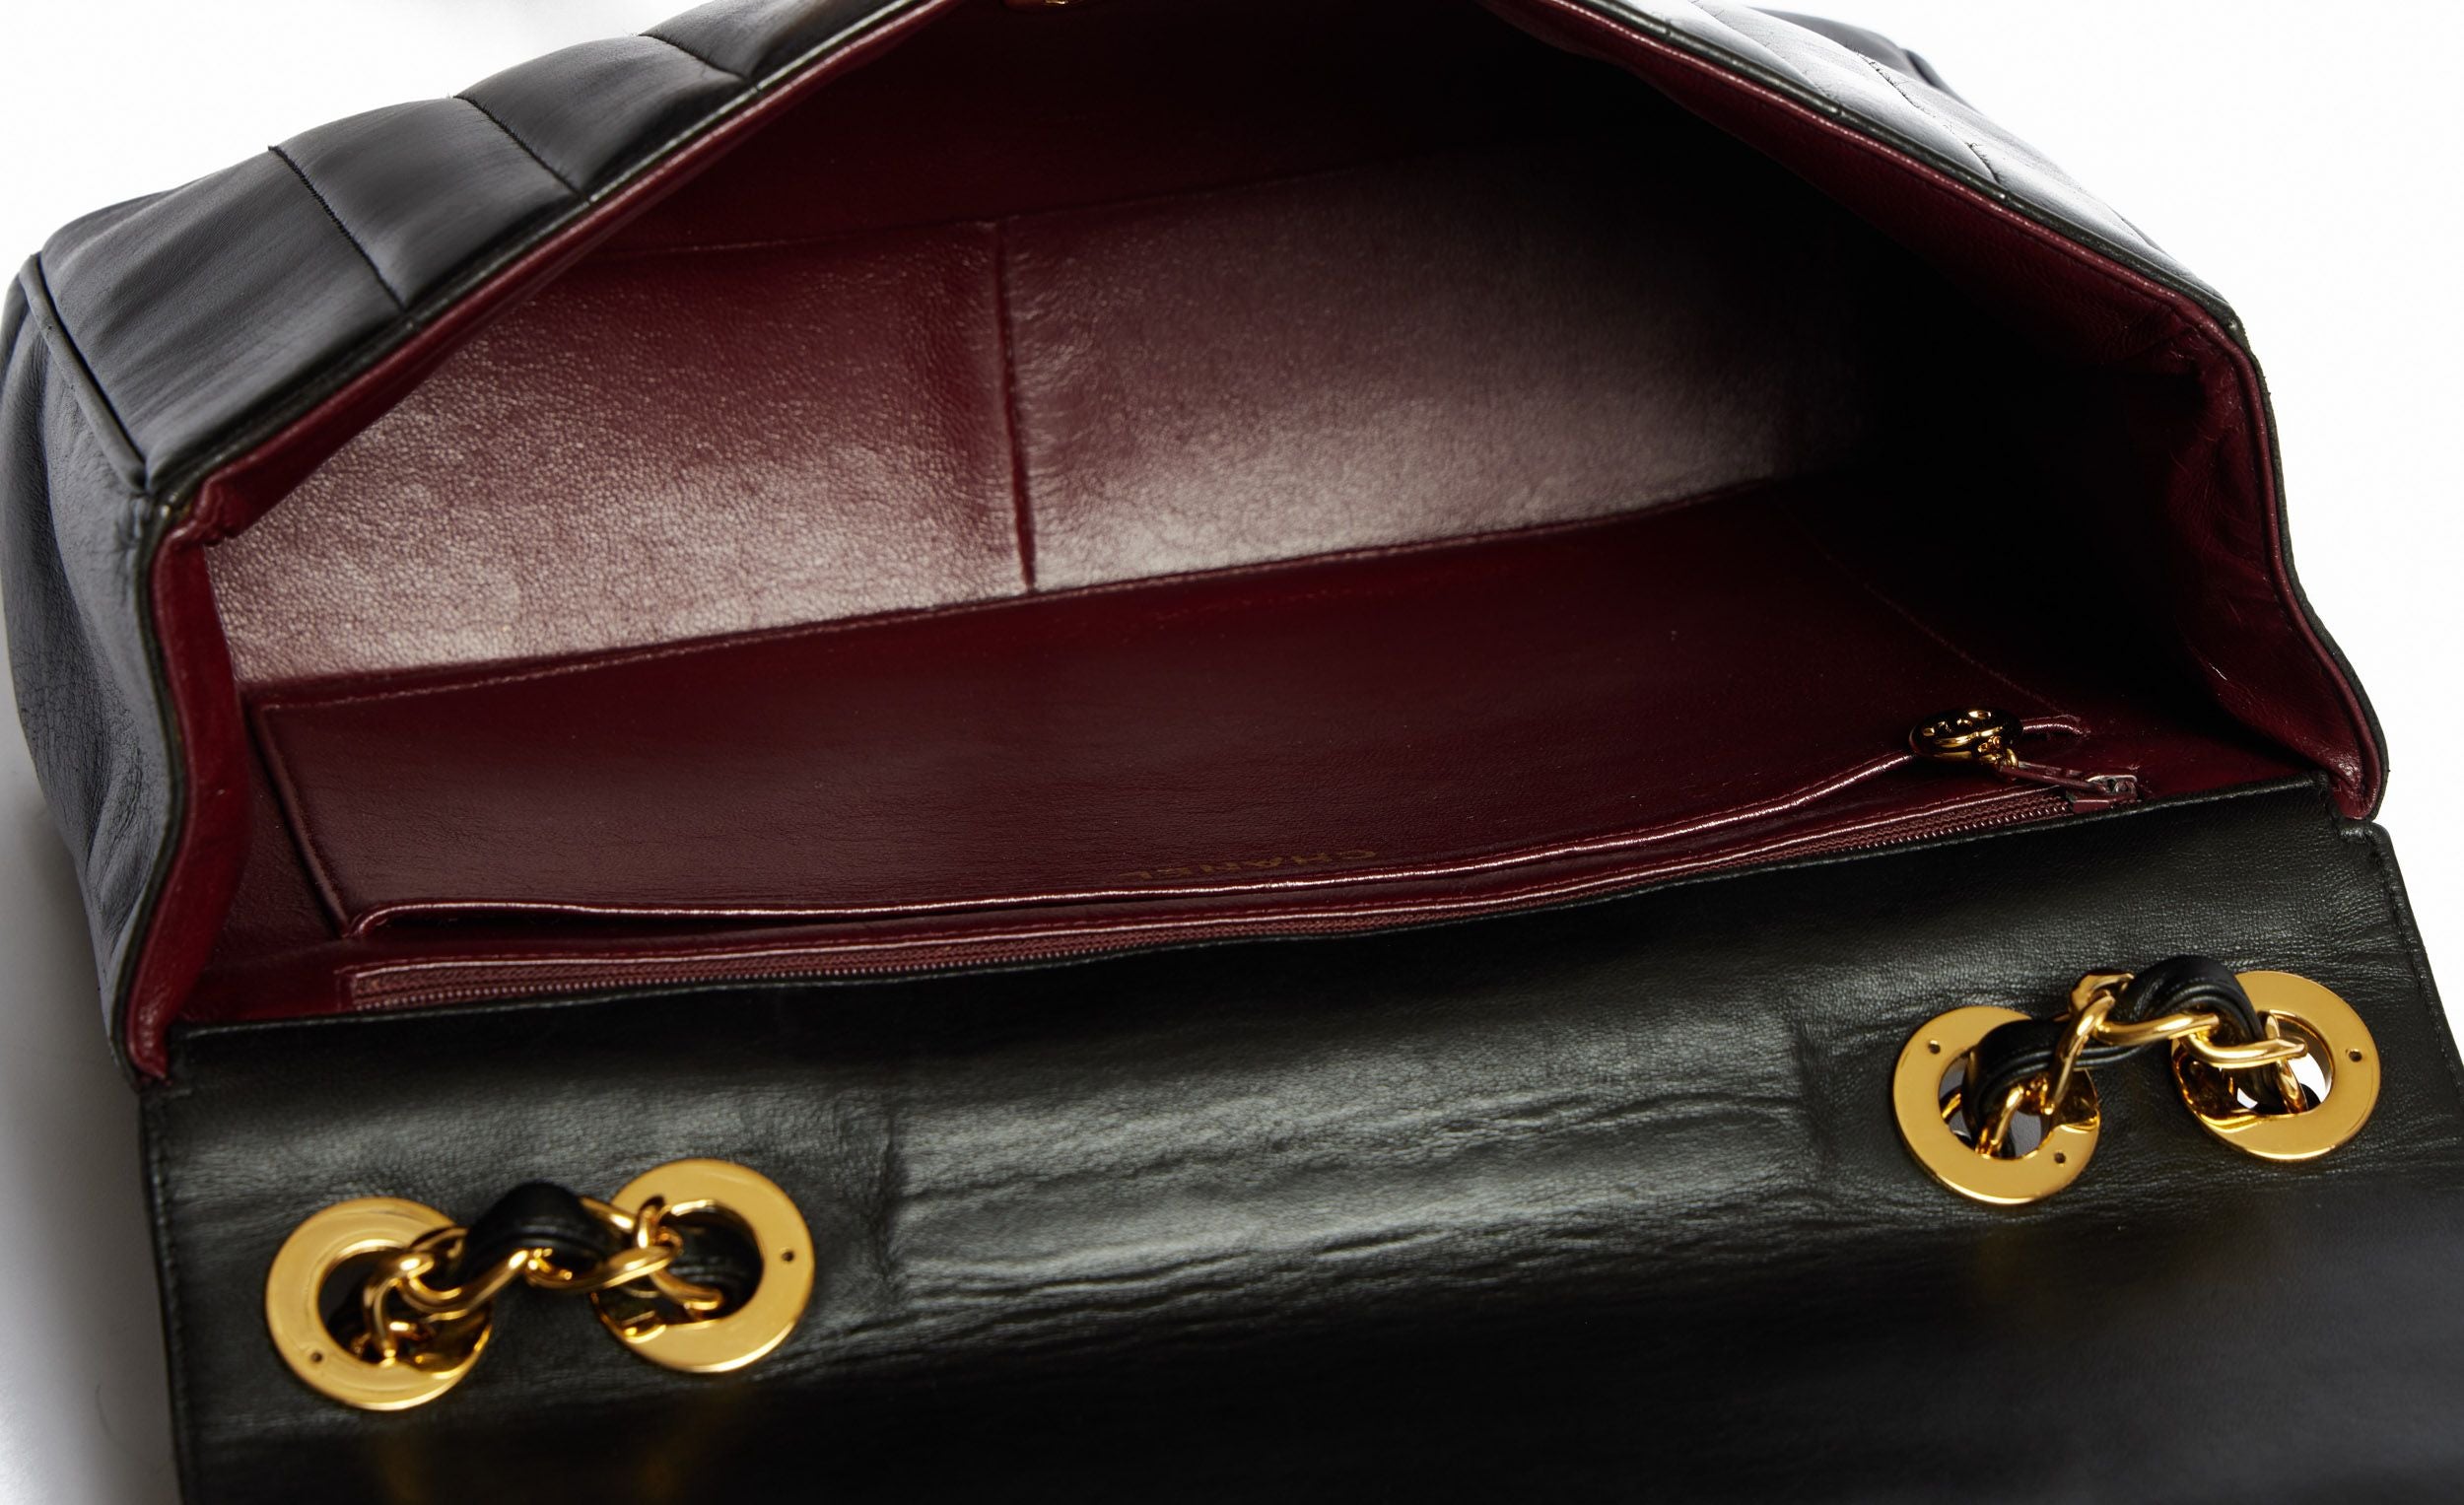 Chanel Lunchbox Vanity Handbag - Black Patent Large - Rare!